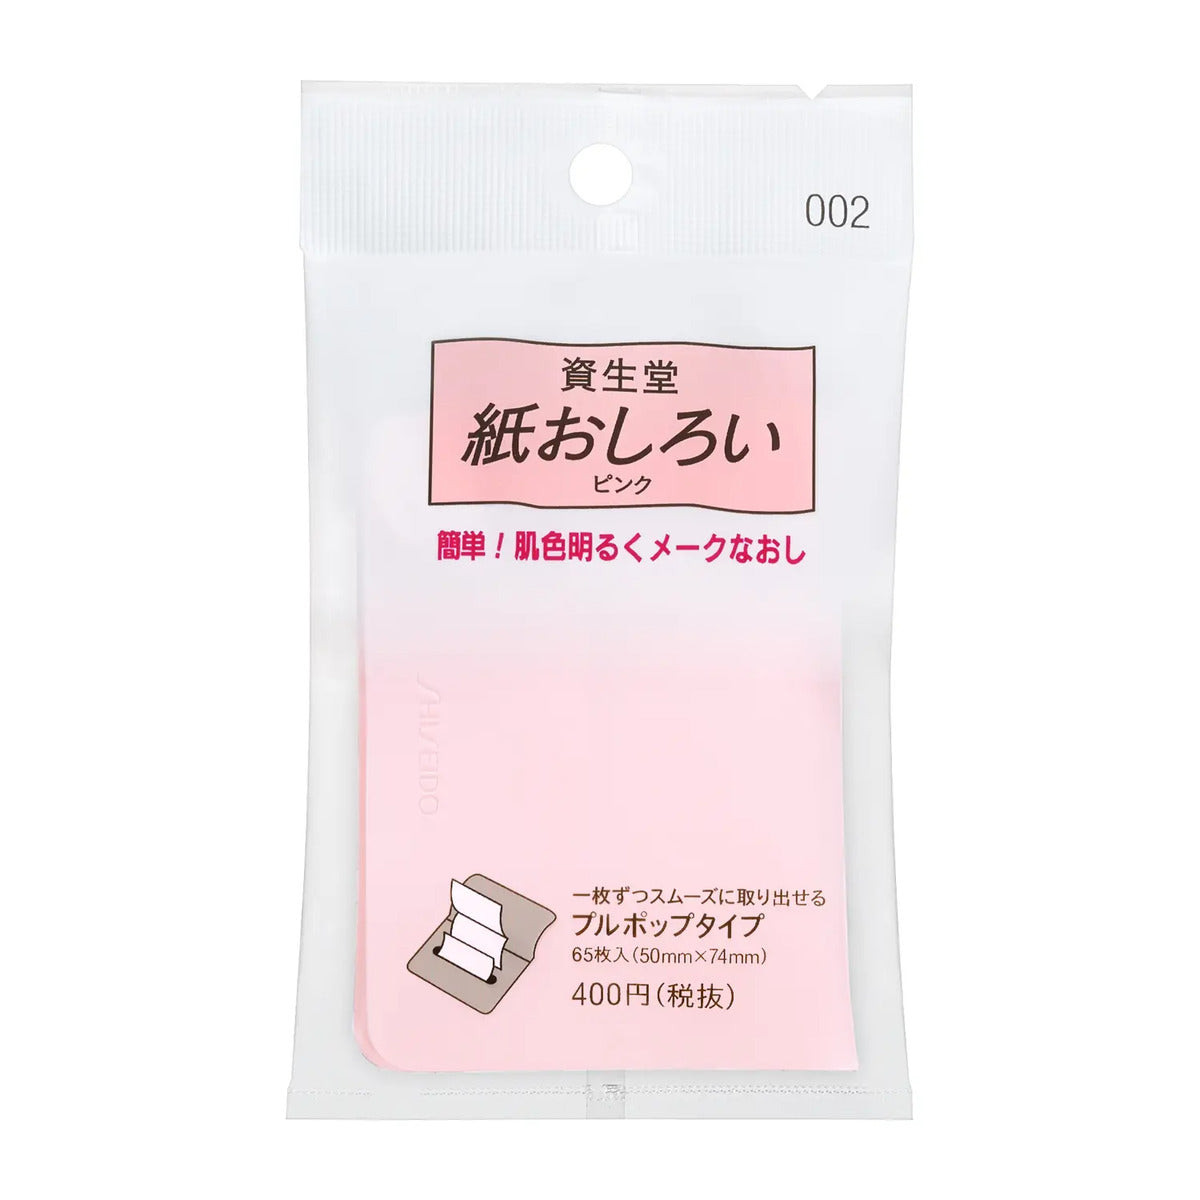 Shiseido Paper Oil Powder Pull Pop 002 Pink